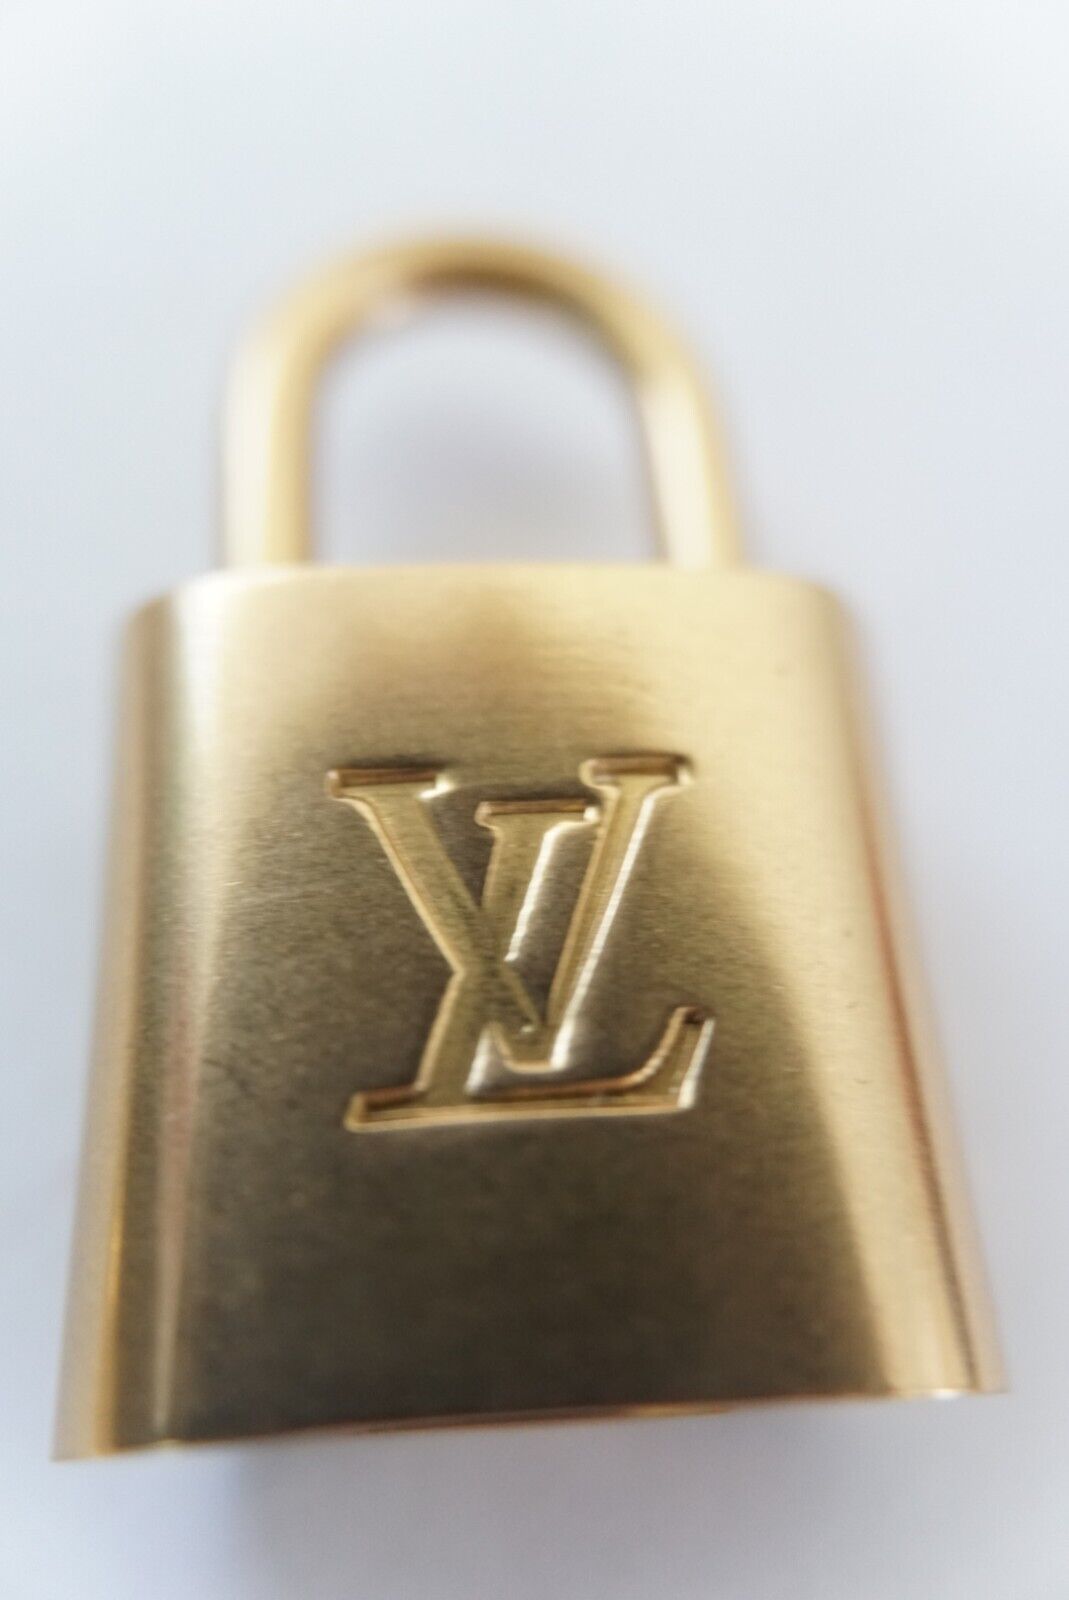 Lock & Key   LV  1 pieces   metal   Color matte gold number 315